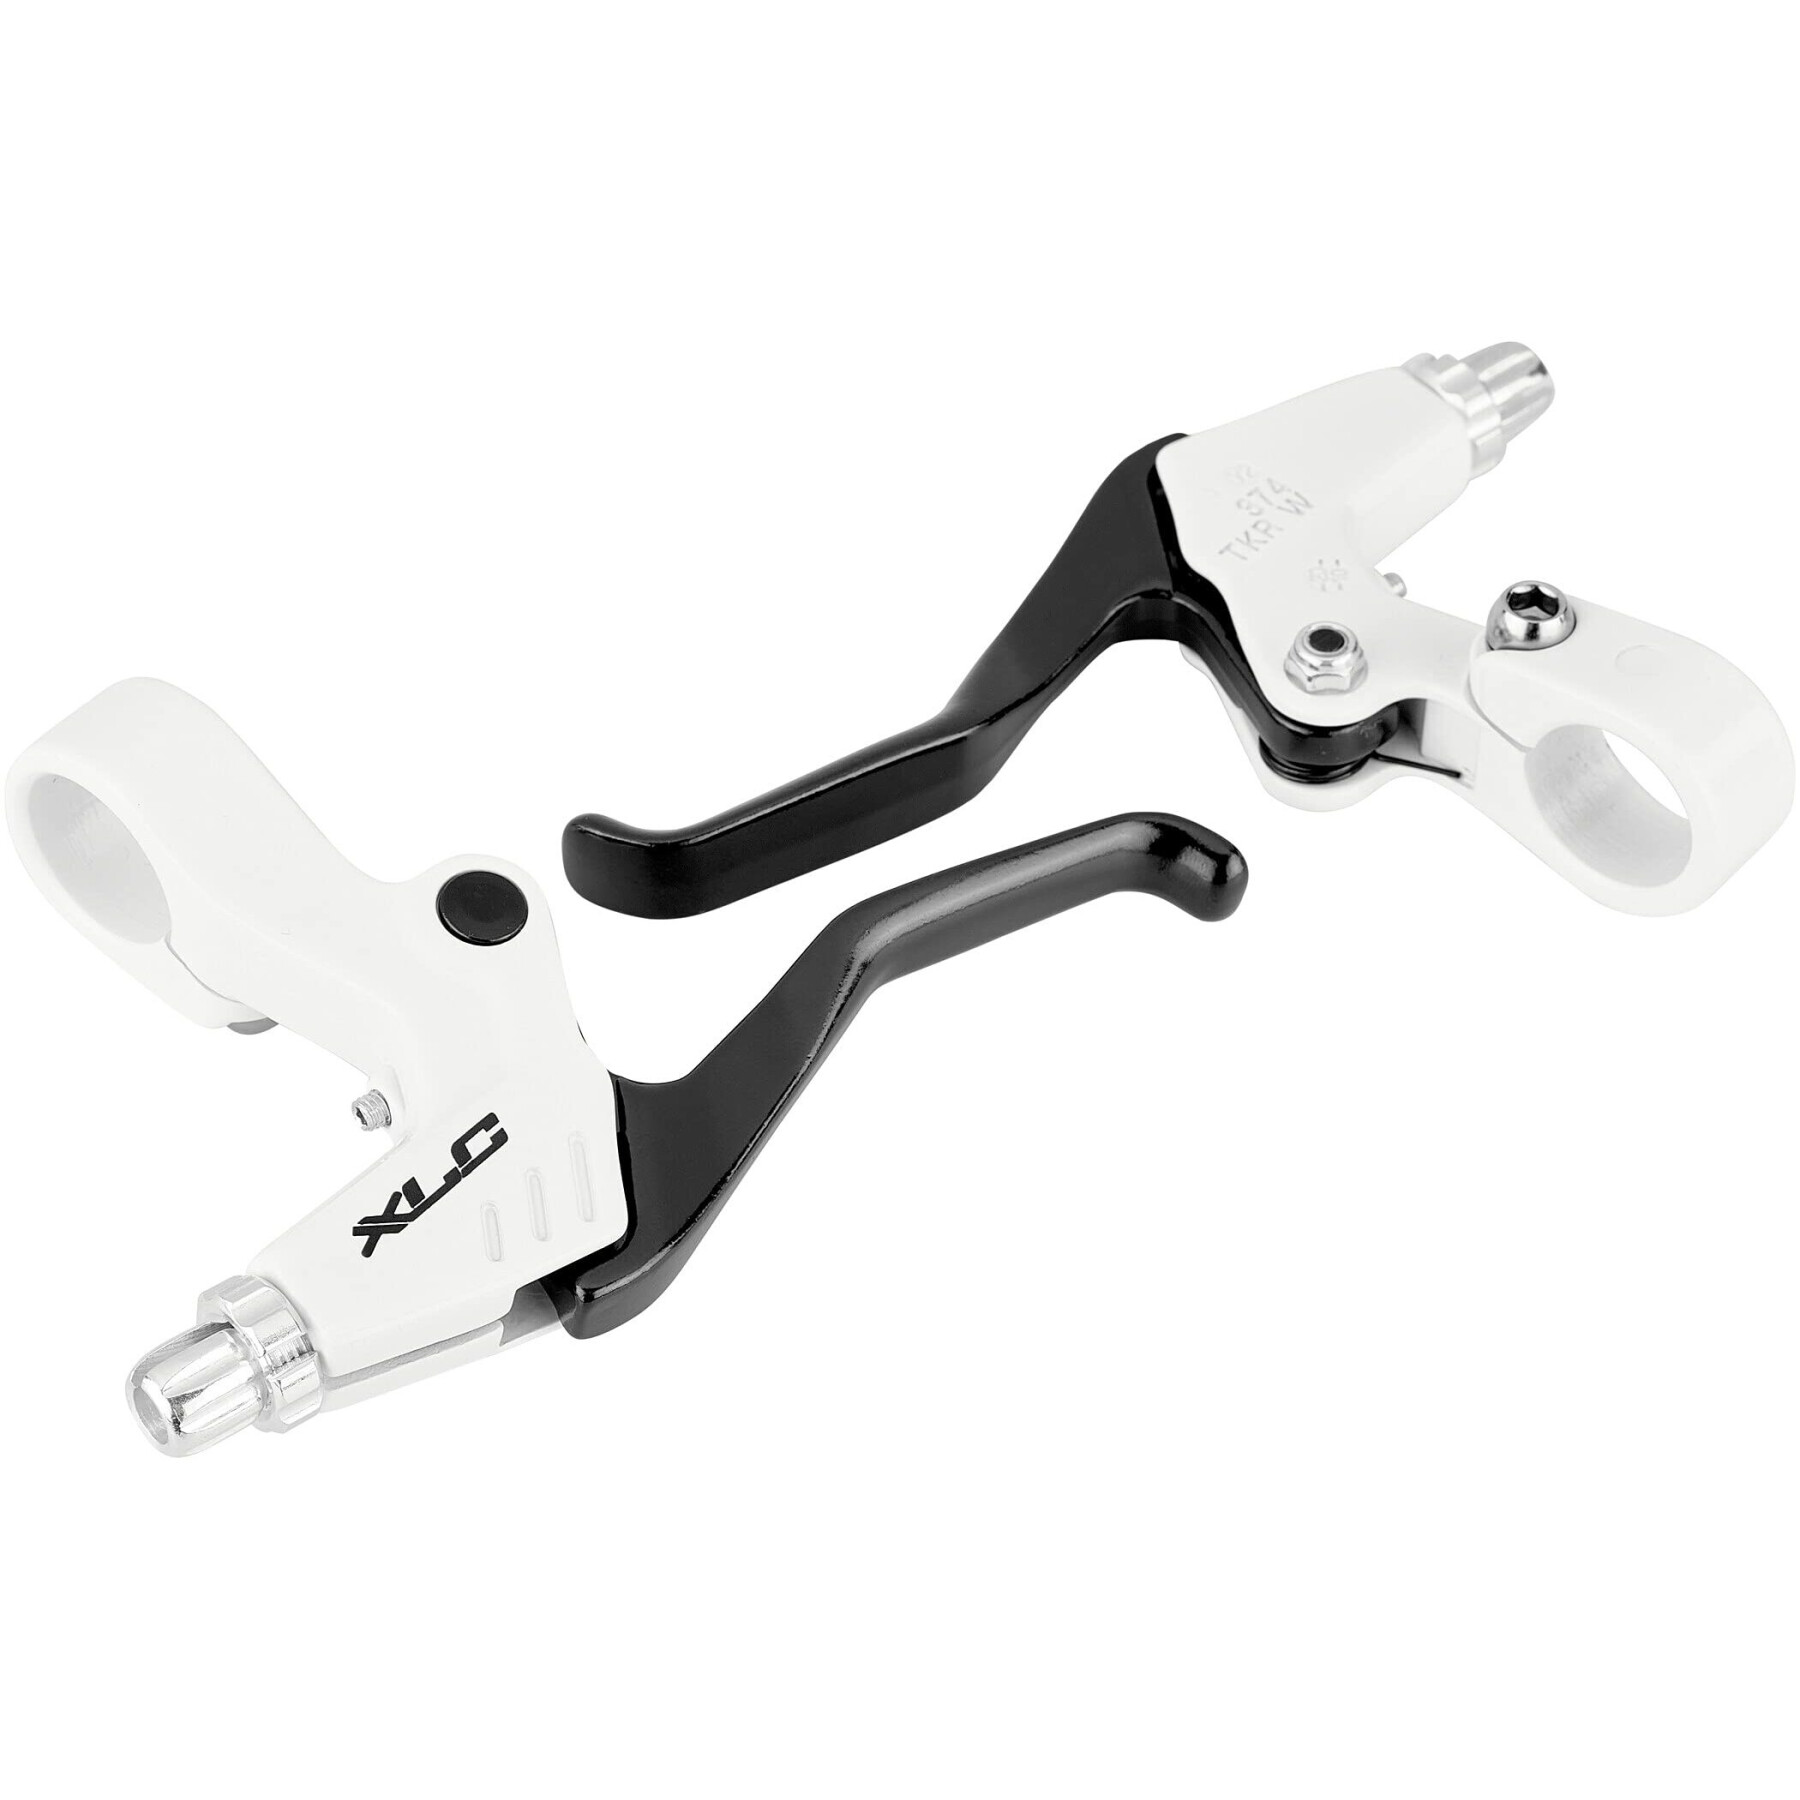 Pair of aluminium brake levers XLC bl-v01 rapidfire/v-brake